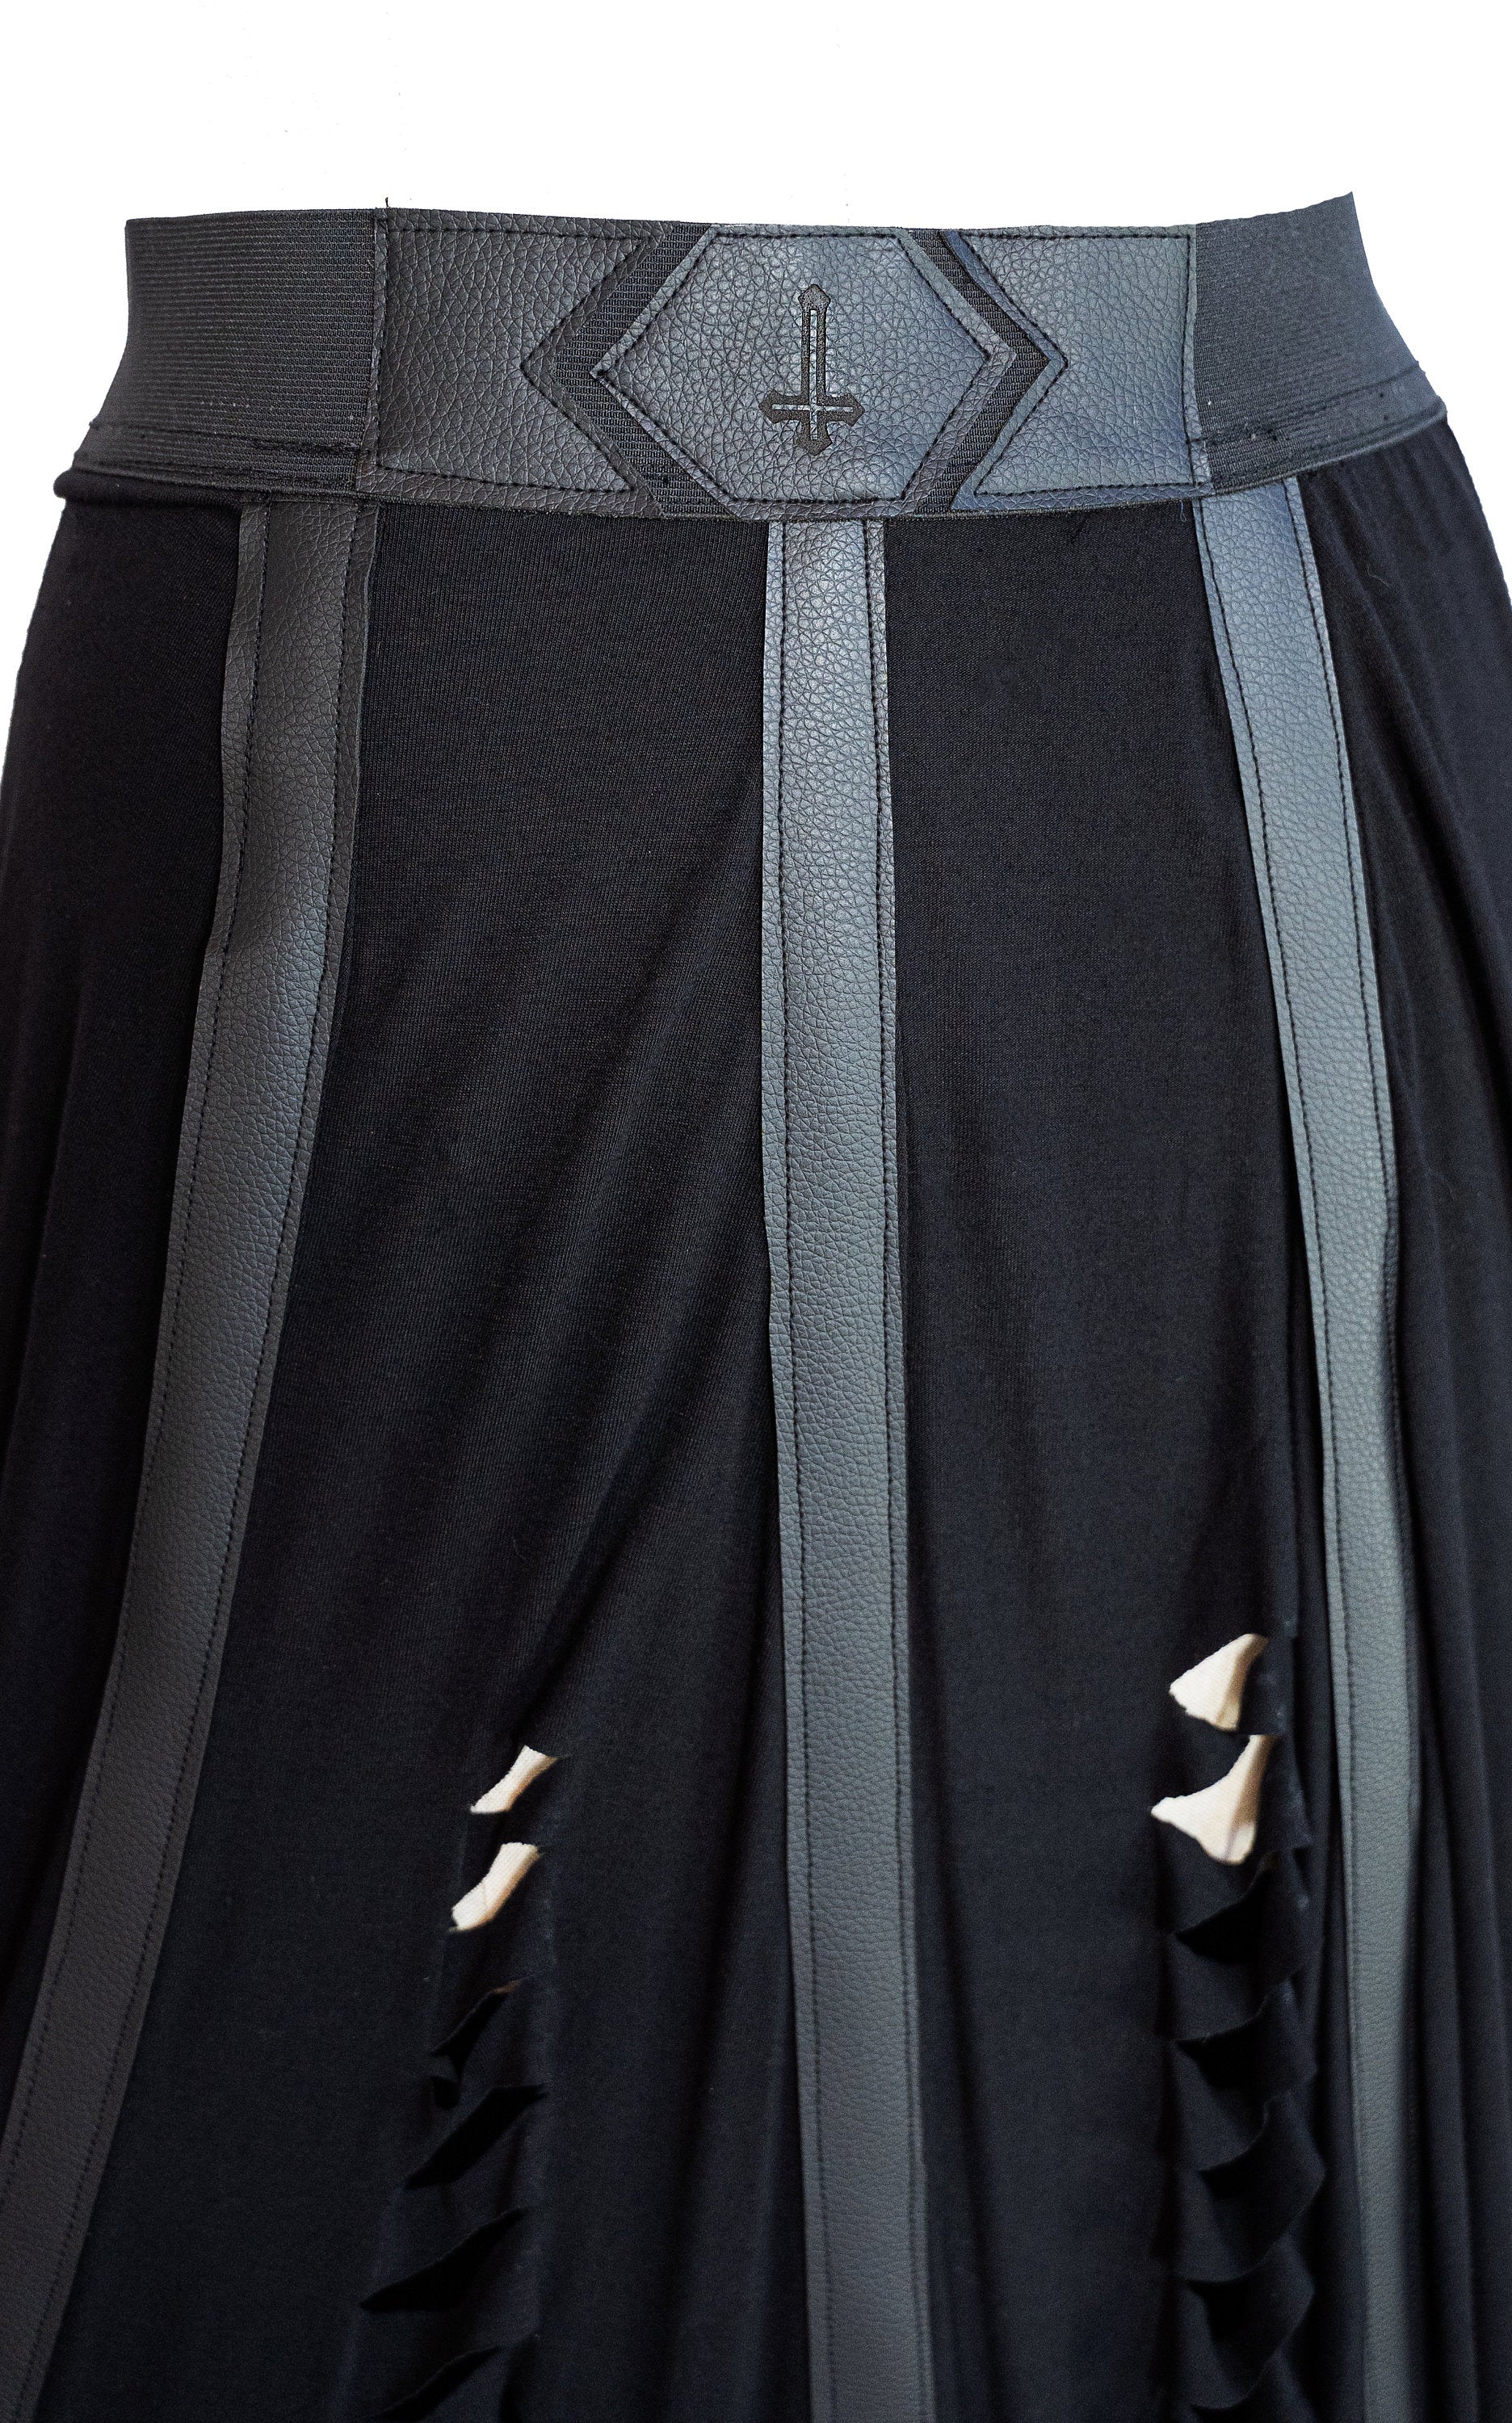 Slashed goth maxi skirt vegan leather skirt black maxi skirt cross skirt | alt skirt goth skirt gothic skirt steampunk skirt